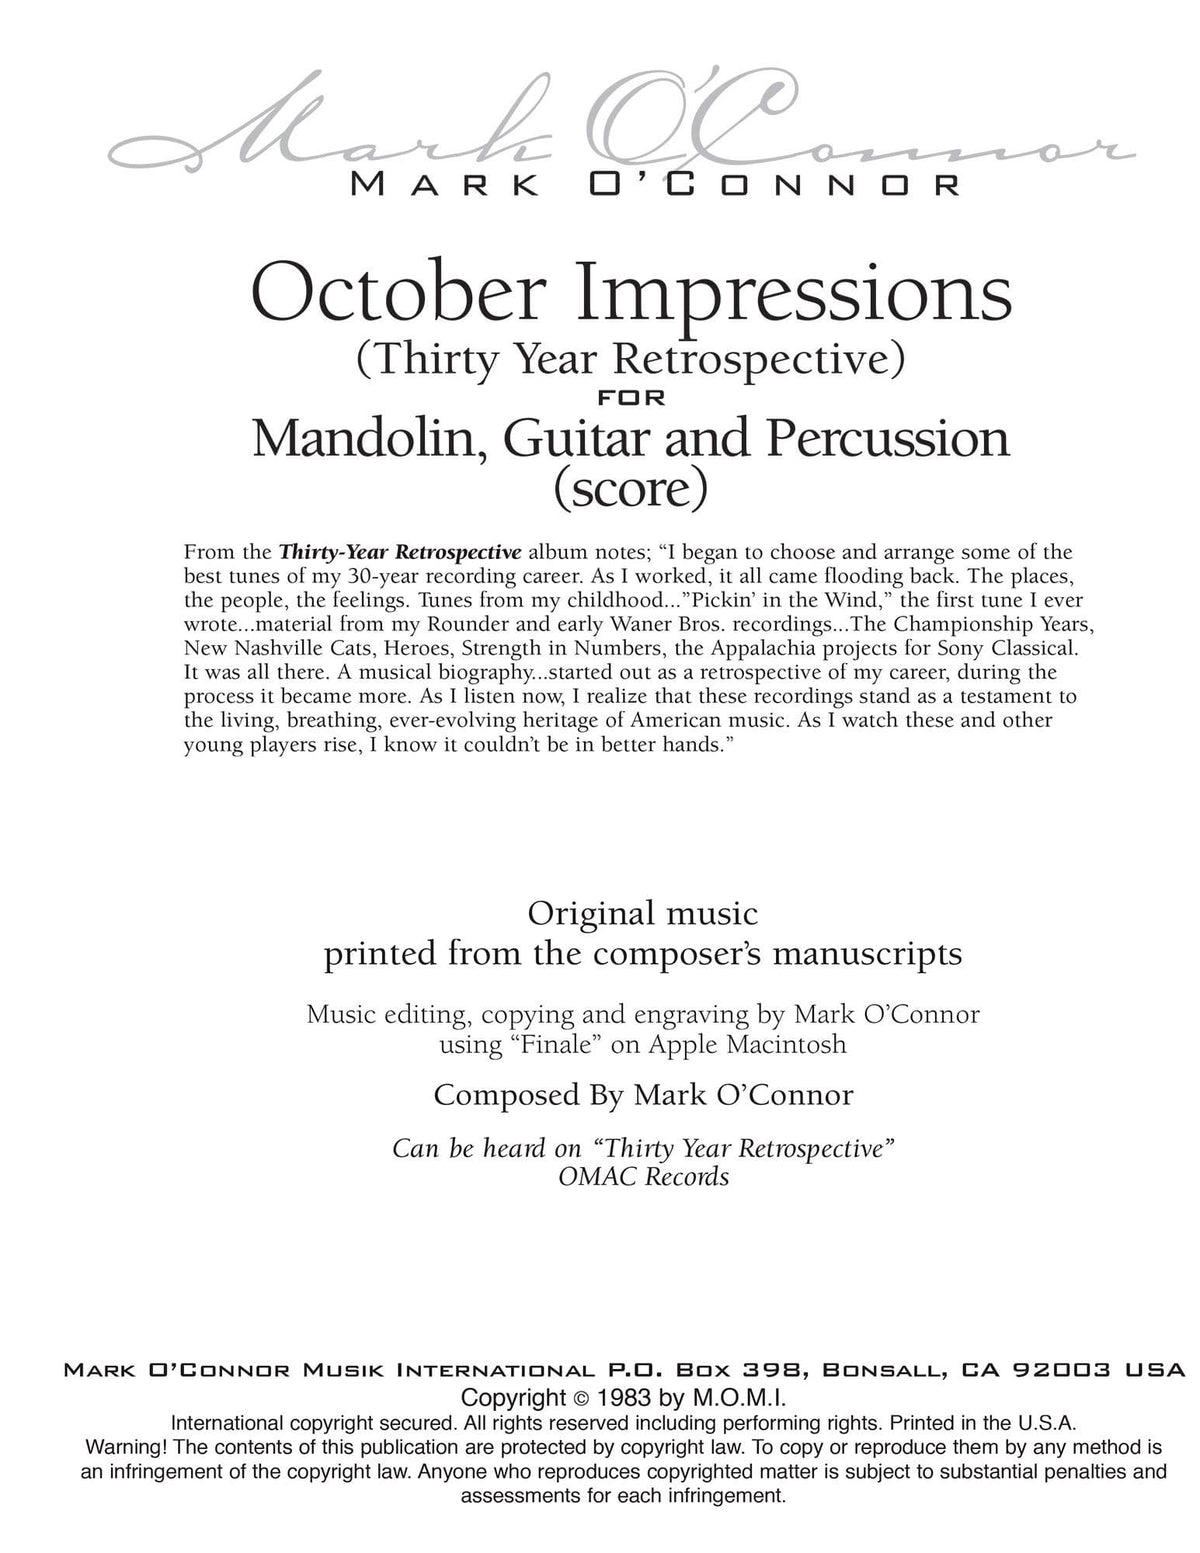 O'Connor, Mark - October Impressions for Mandolin, Guitar, and Percussion - Score - Digital Download